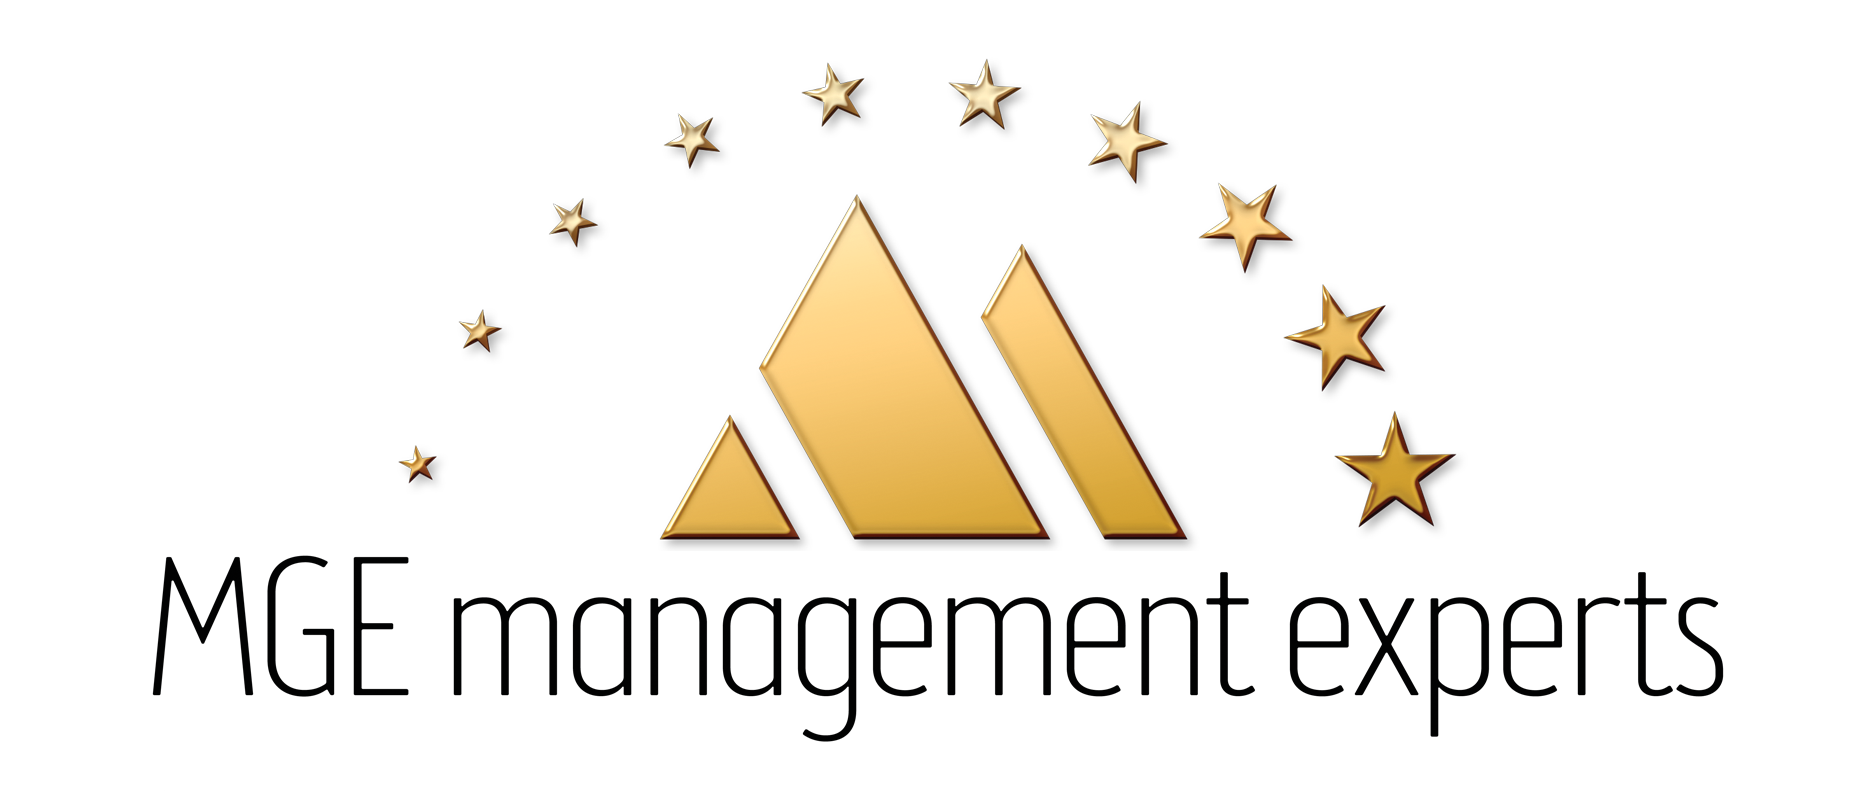 MGE Management Experts Logo